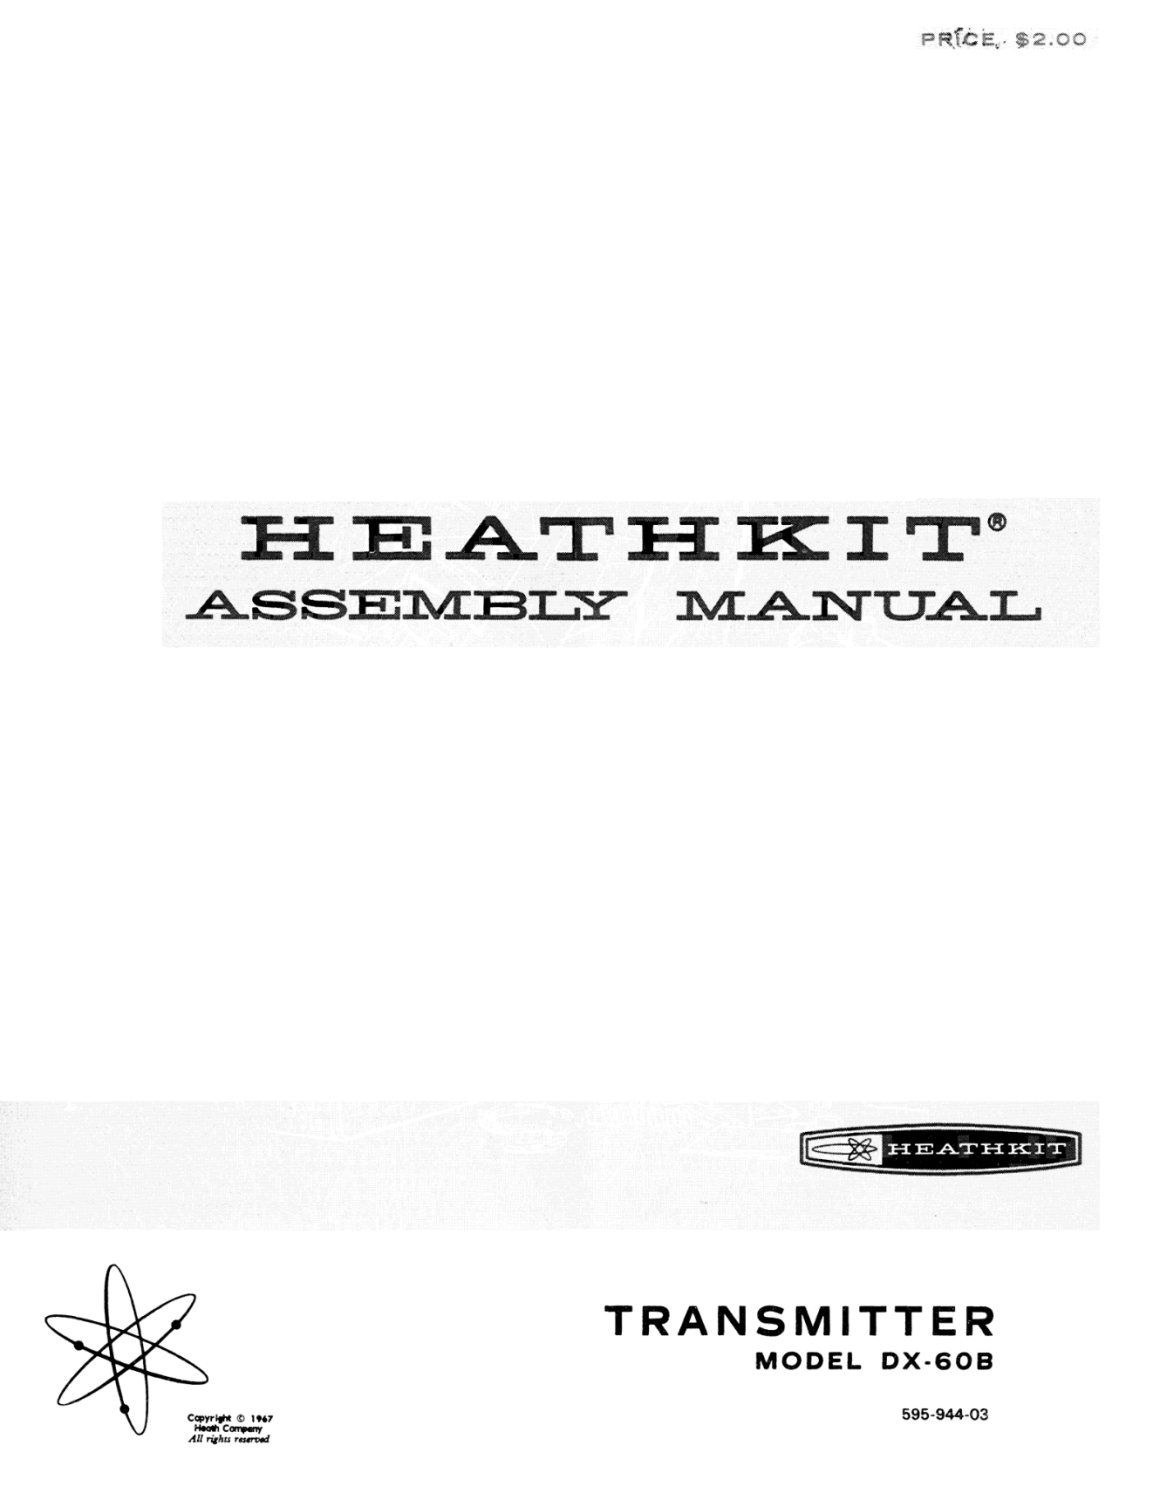 Heathkit DX-60B Transmitter - Assembly Manual